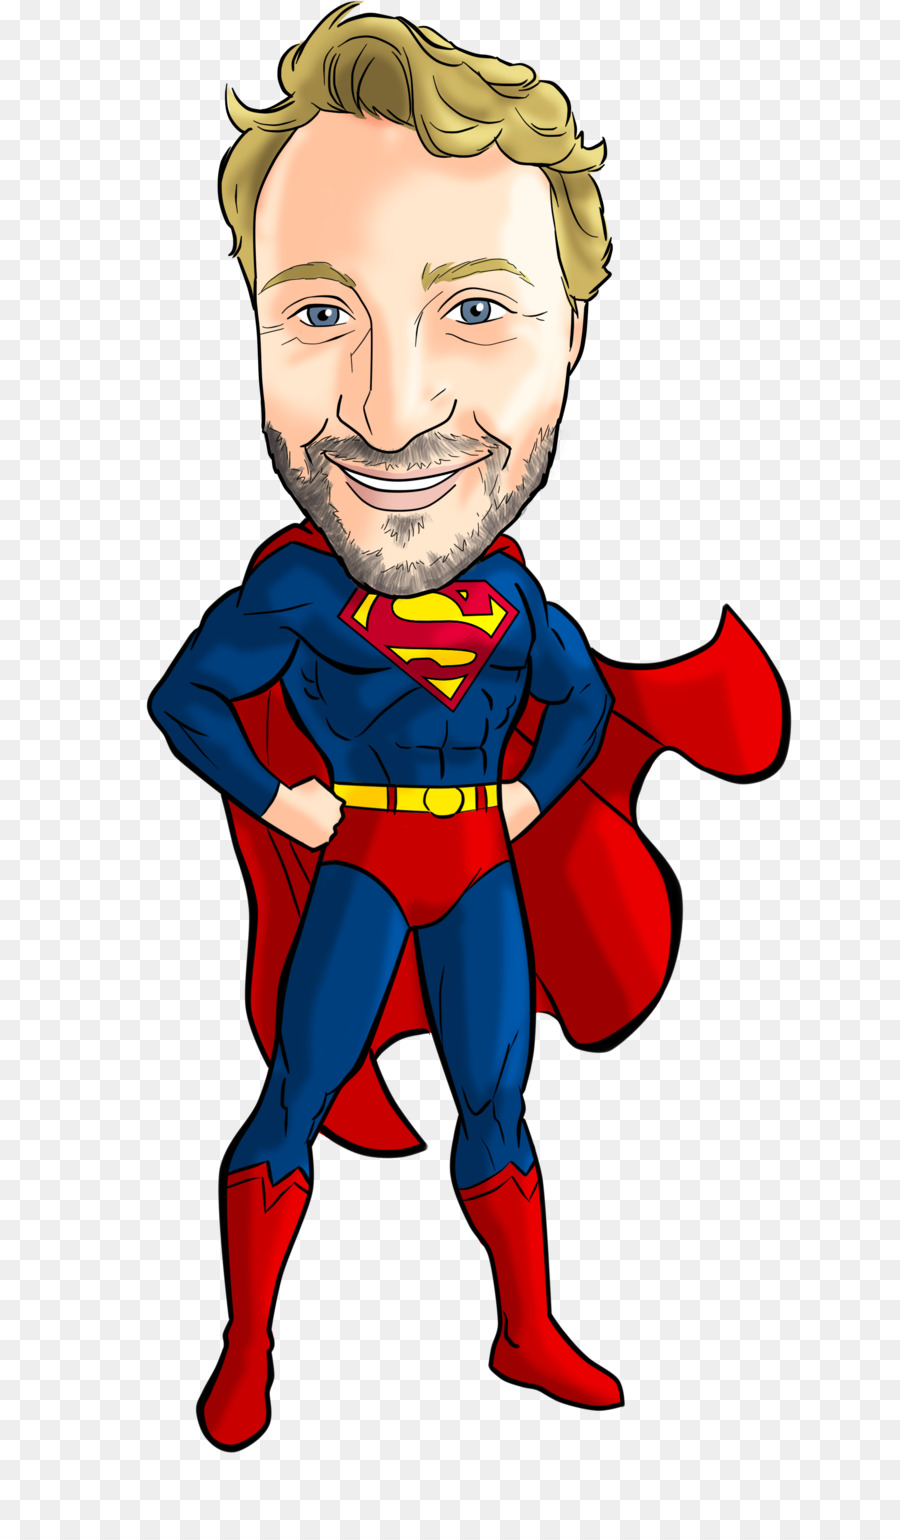 Superman Superhero Caricature Cartoon YouTube - superman ...